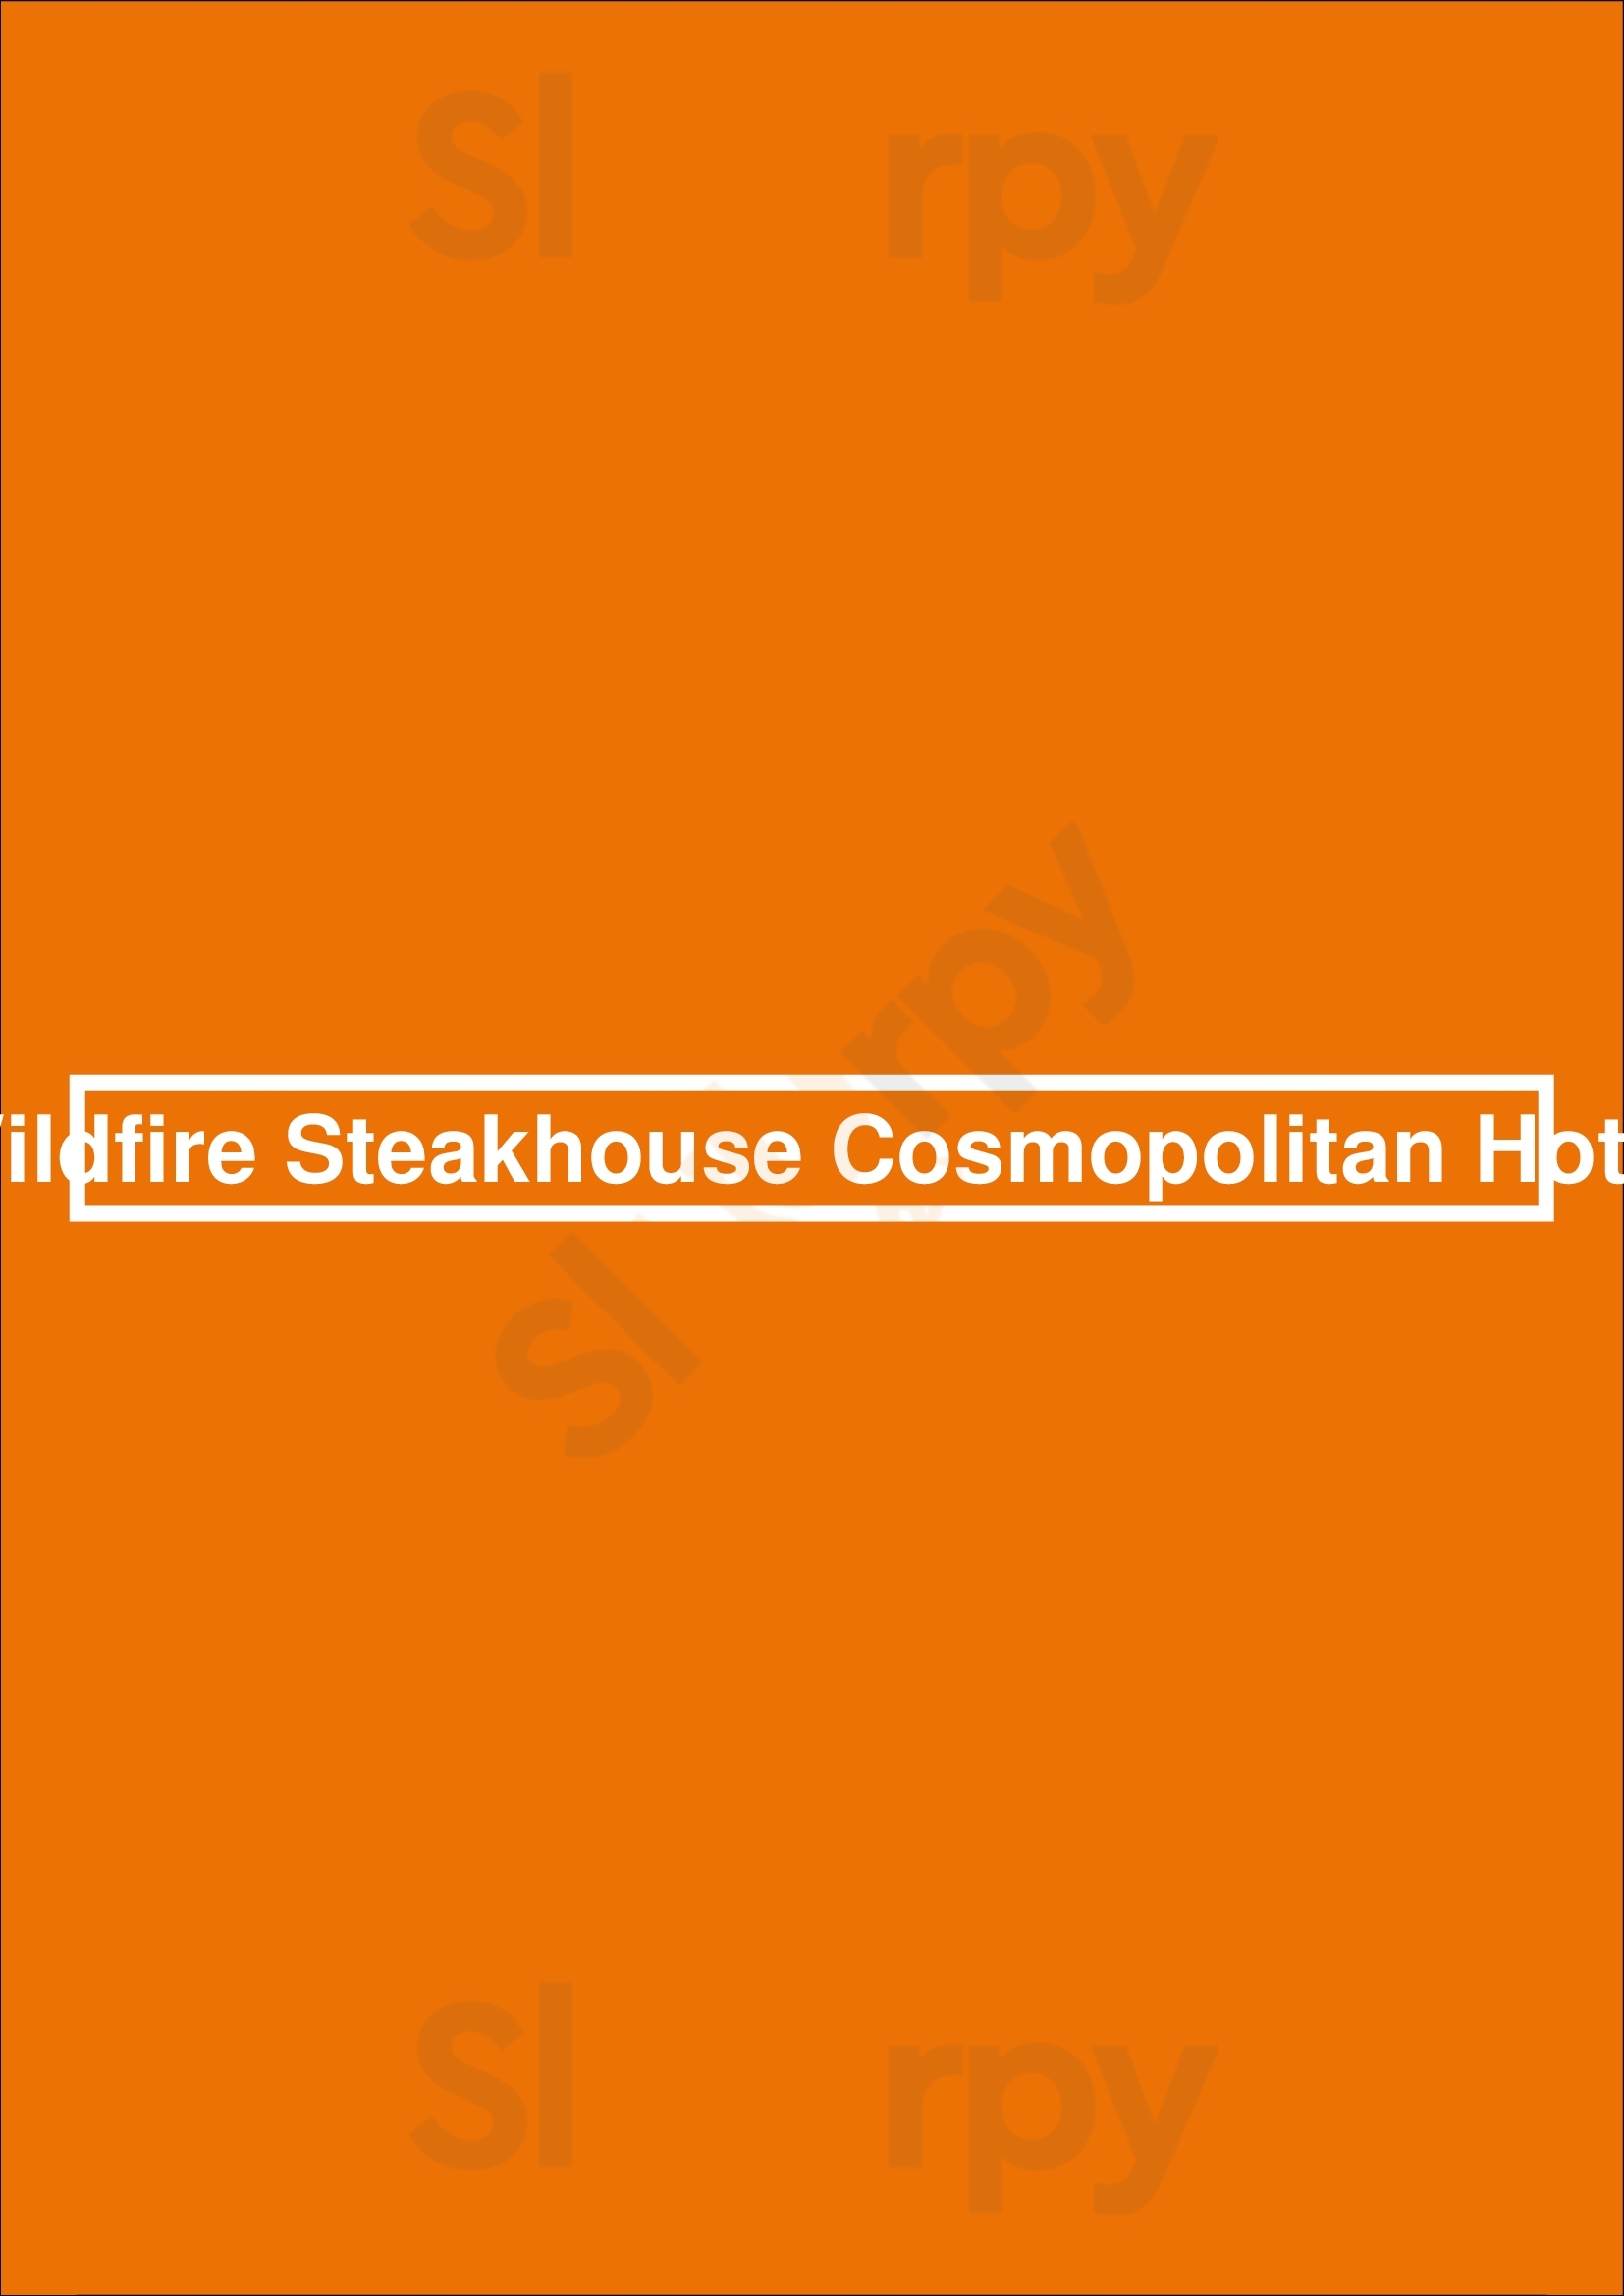 Wildfire Steakhouse Cosmopolitan Hotel Toronto Menu - 1